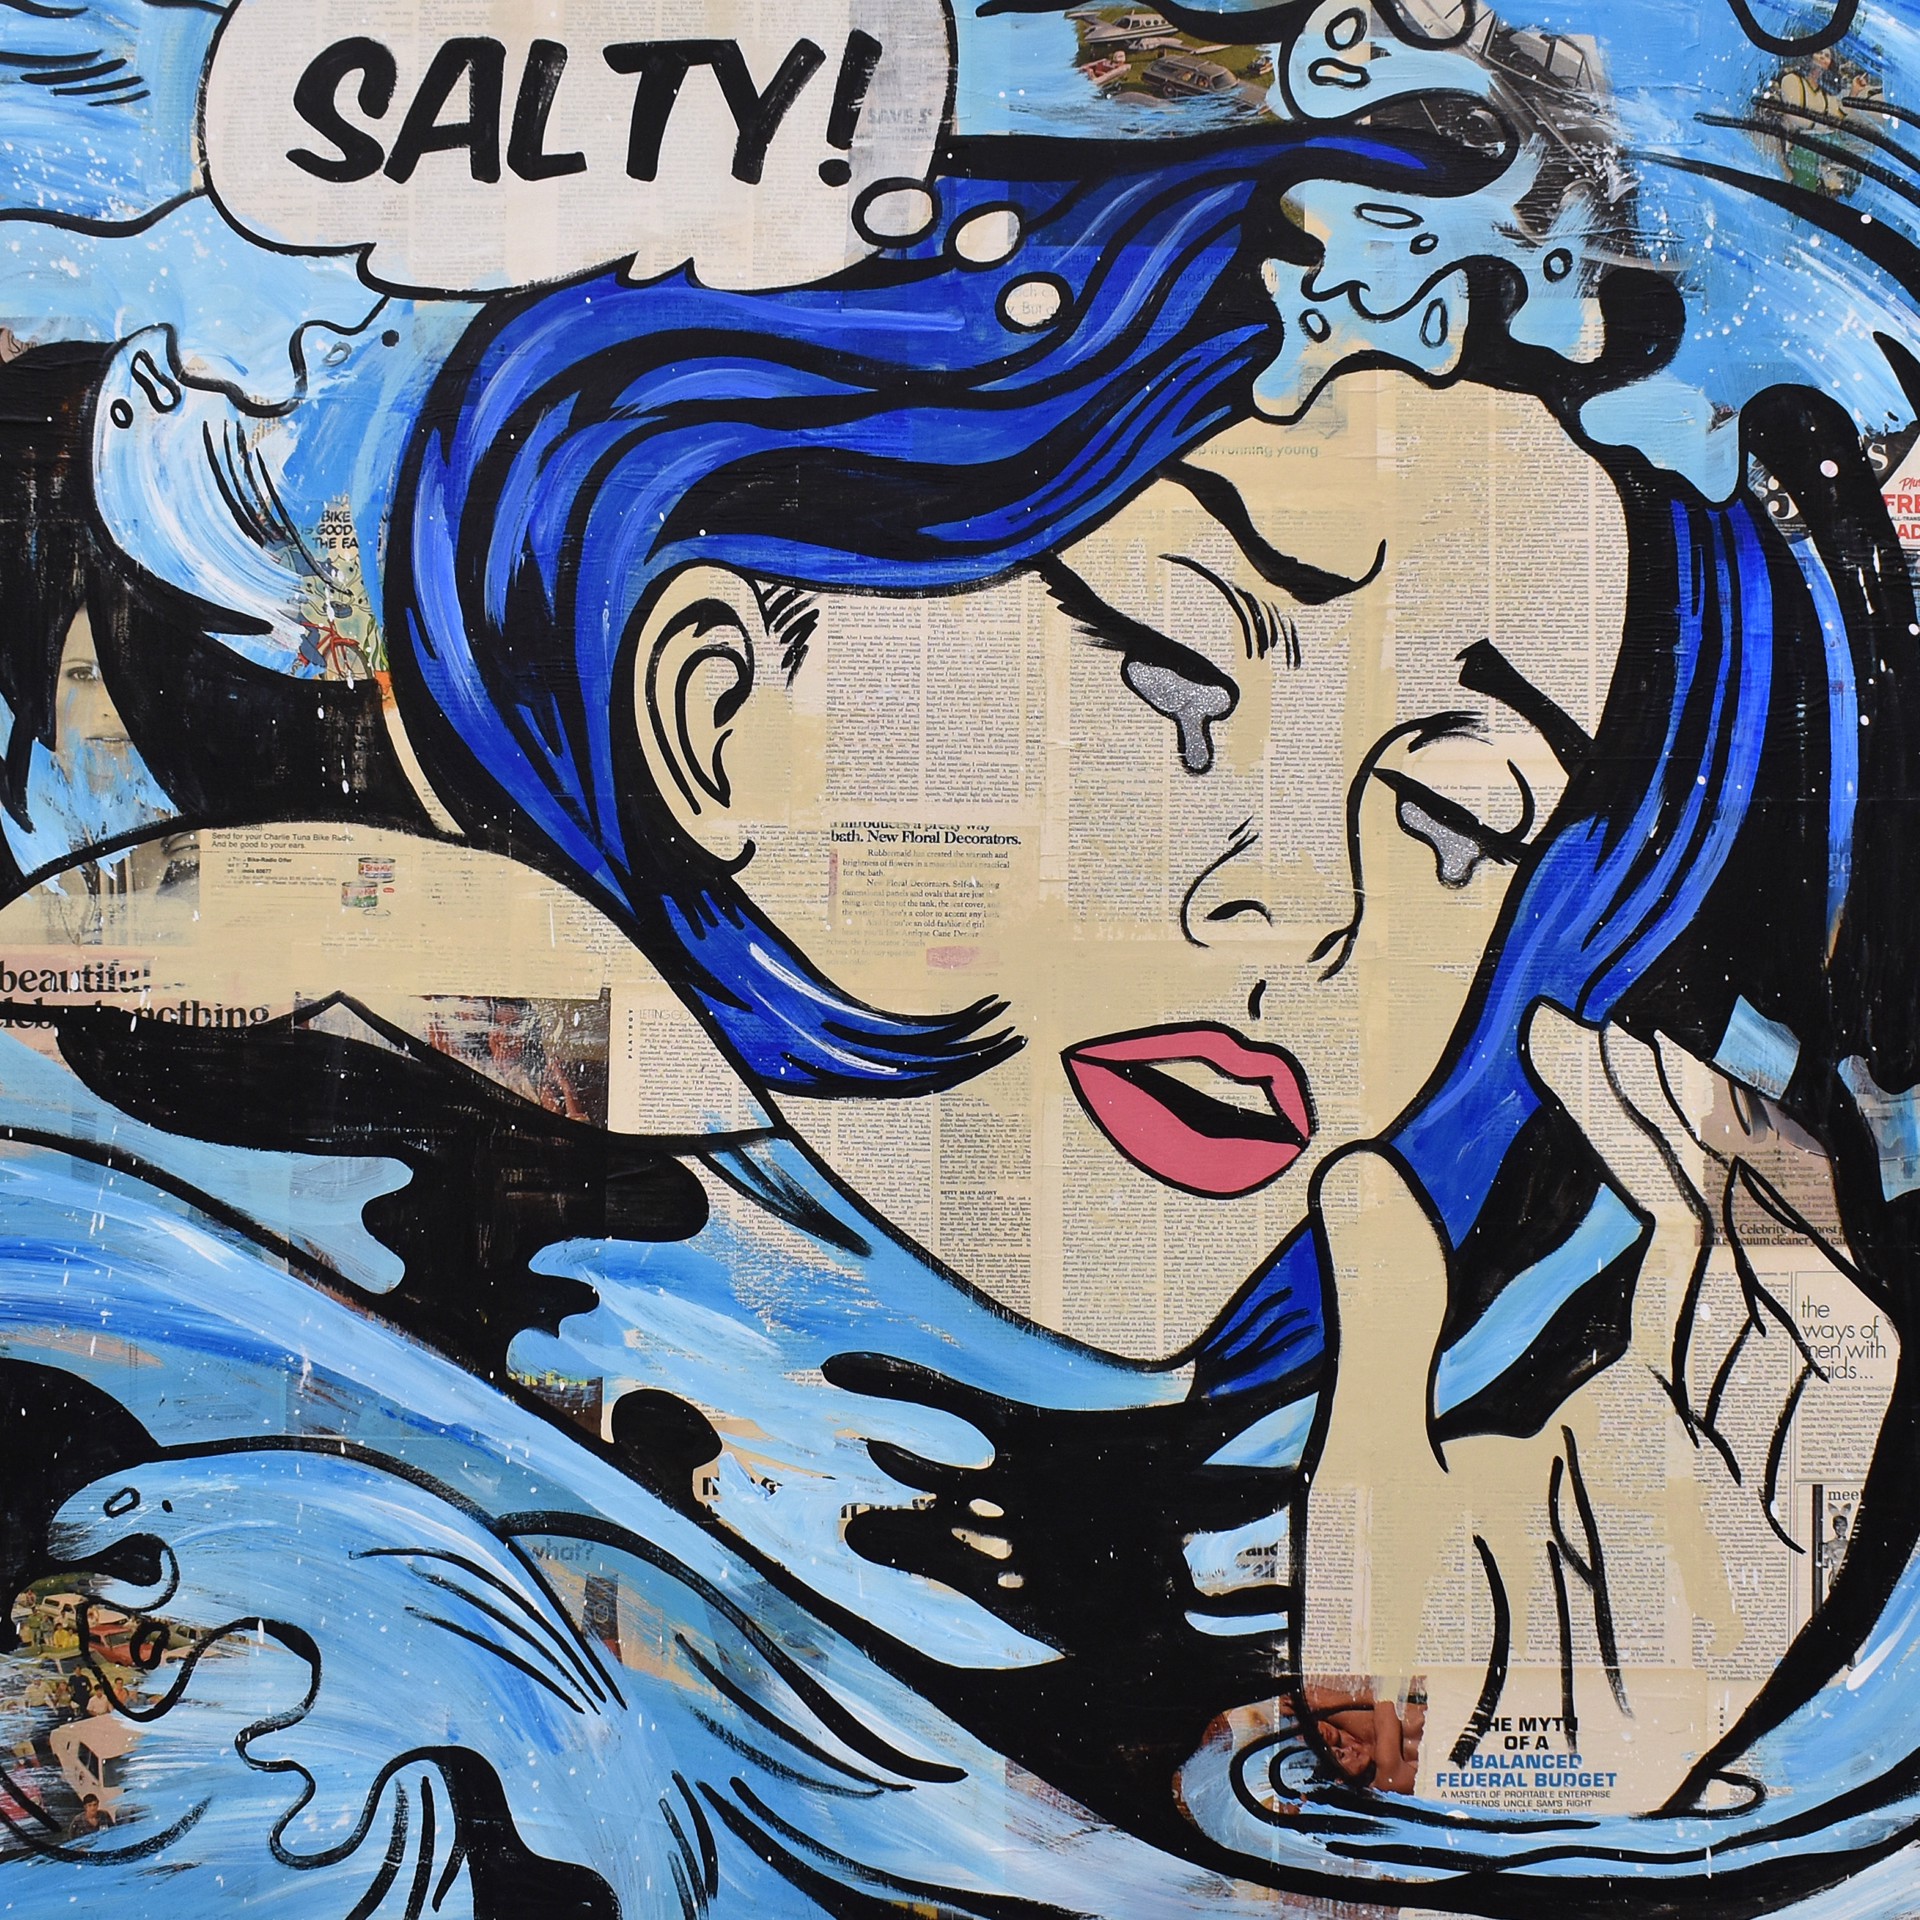 Salty! by Jojo Anavim